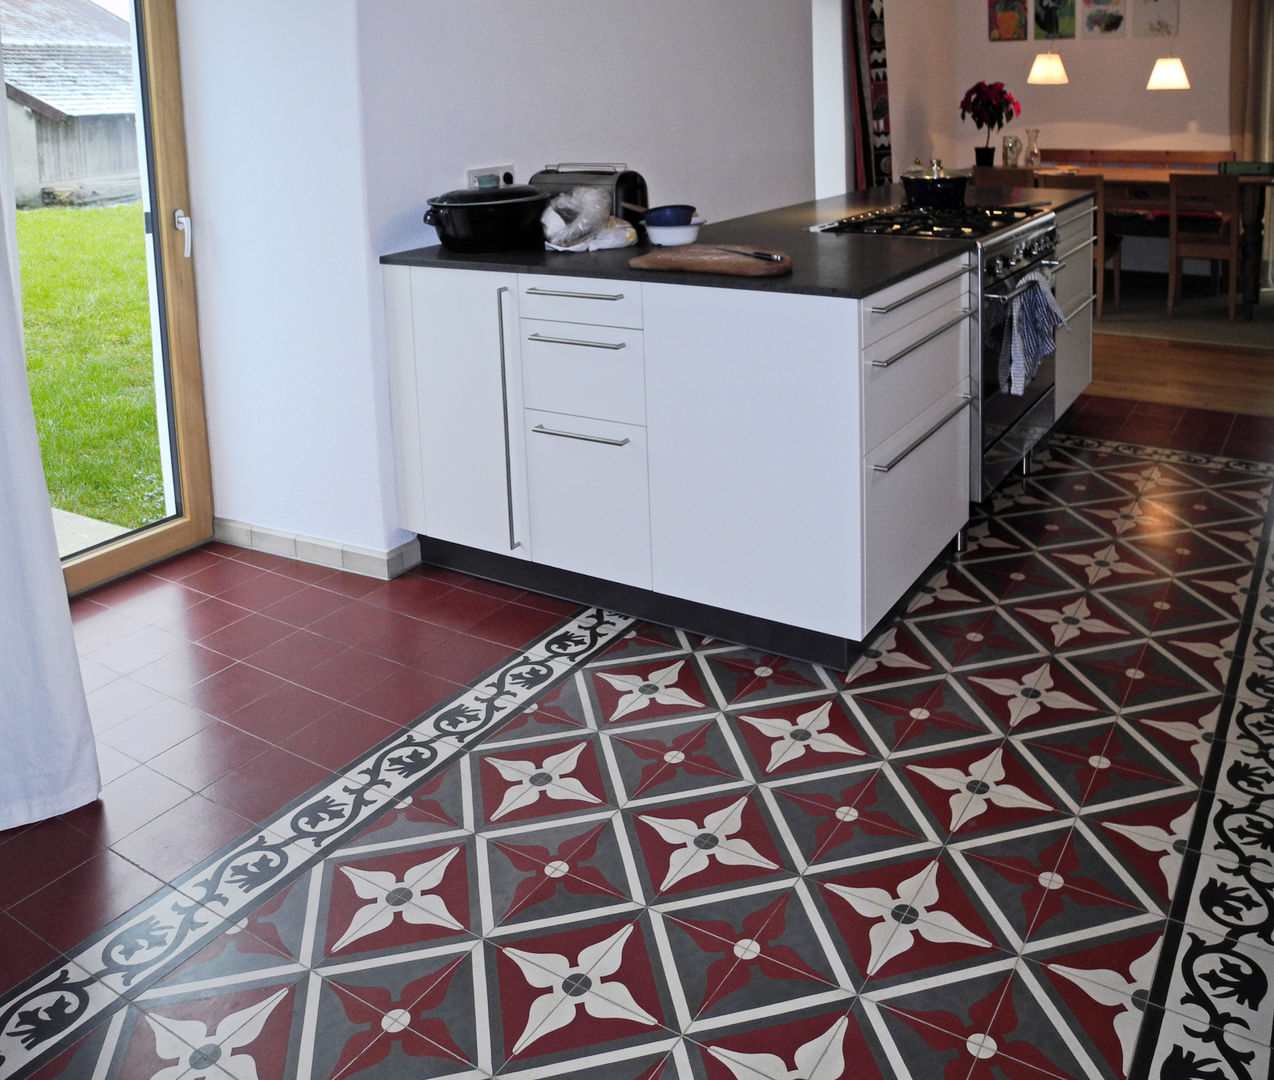 Encaustic Cement Tiles with Endless Pattern Combination, Original Features Original Features Mediterranean walls & floors Tiles